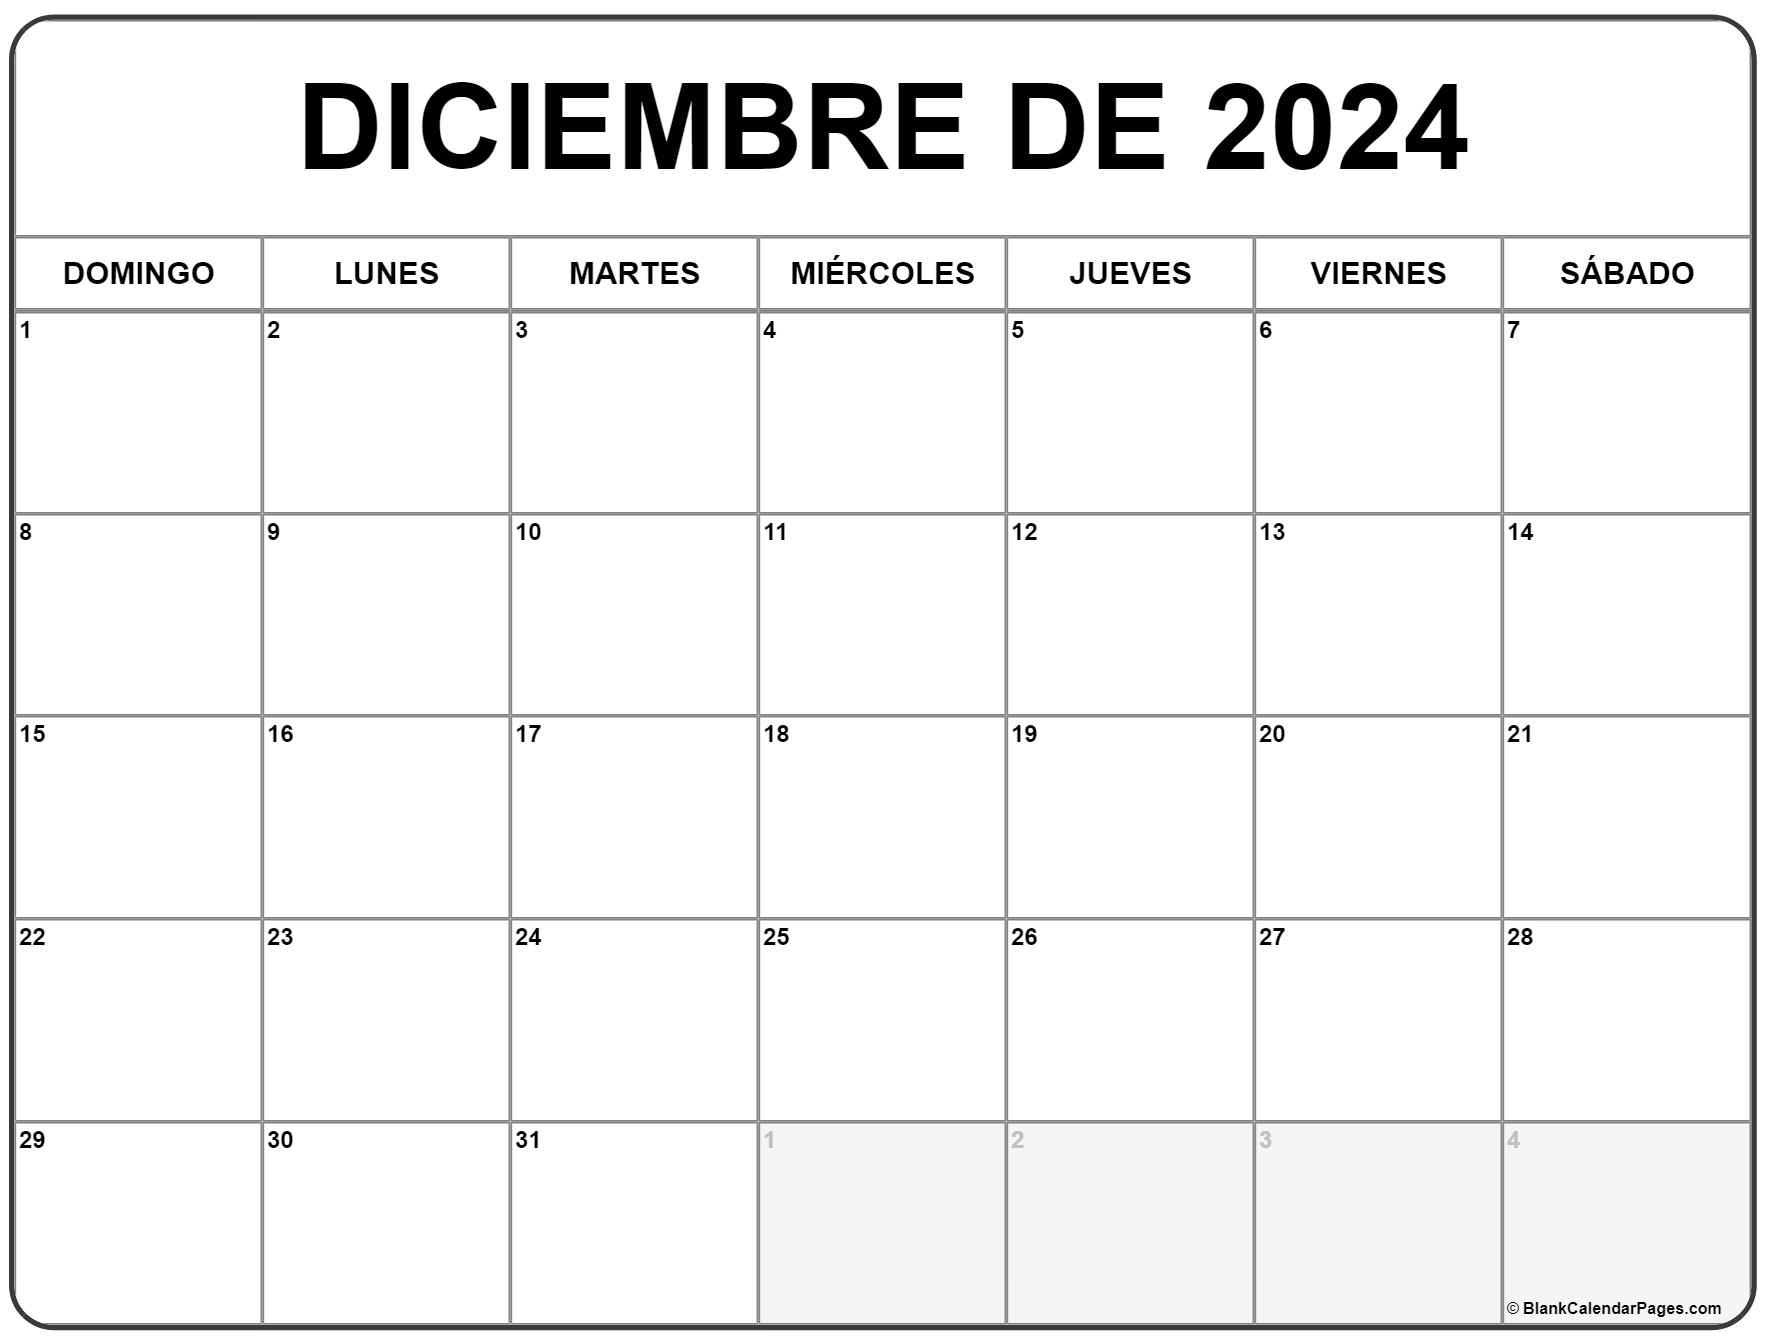 Calendario De Diciembre 2024 Janis Lizbeth